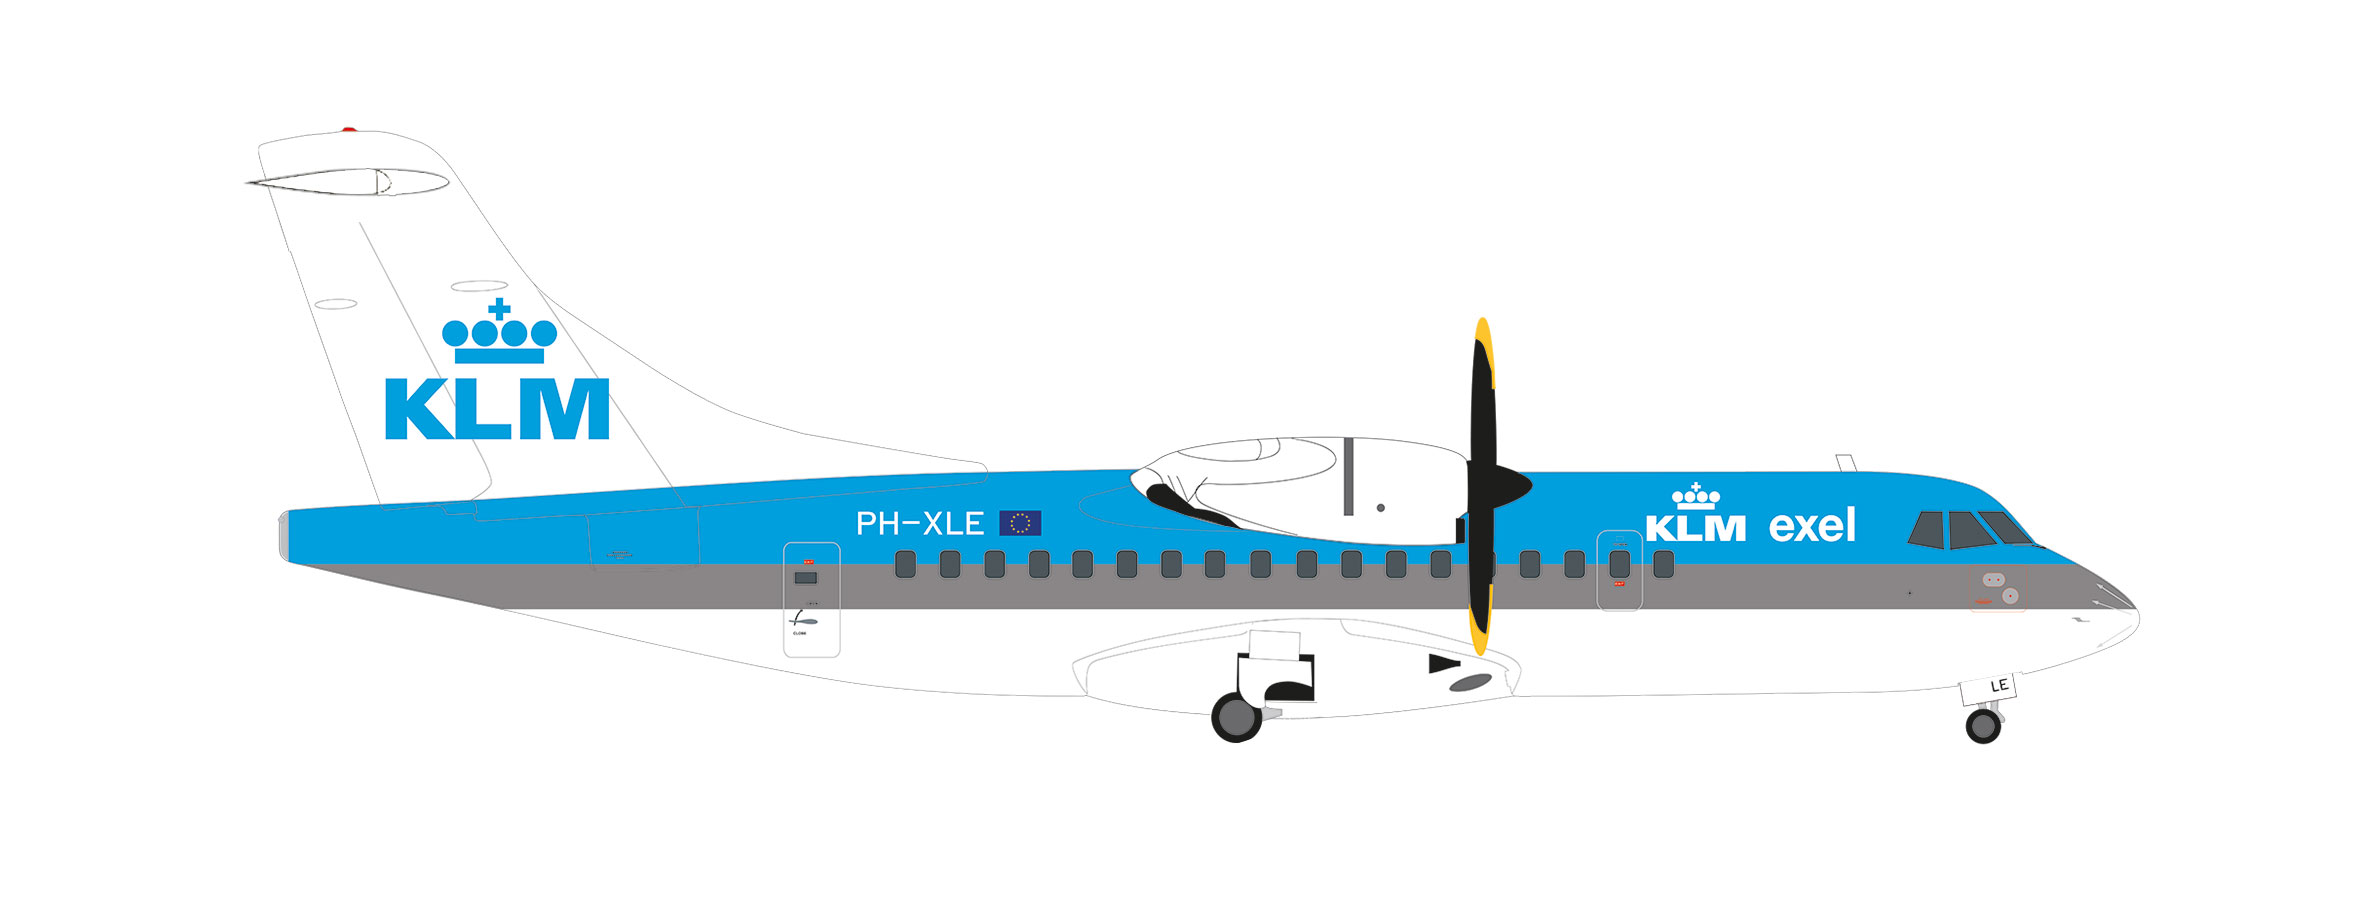 KLM Exel ATR-42-300 